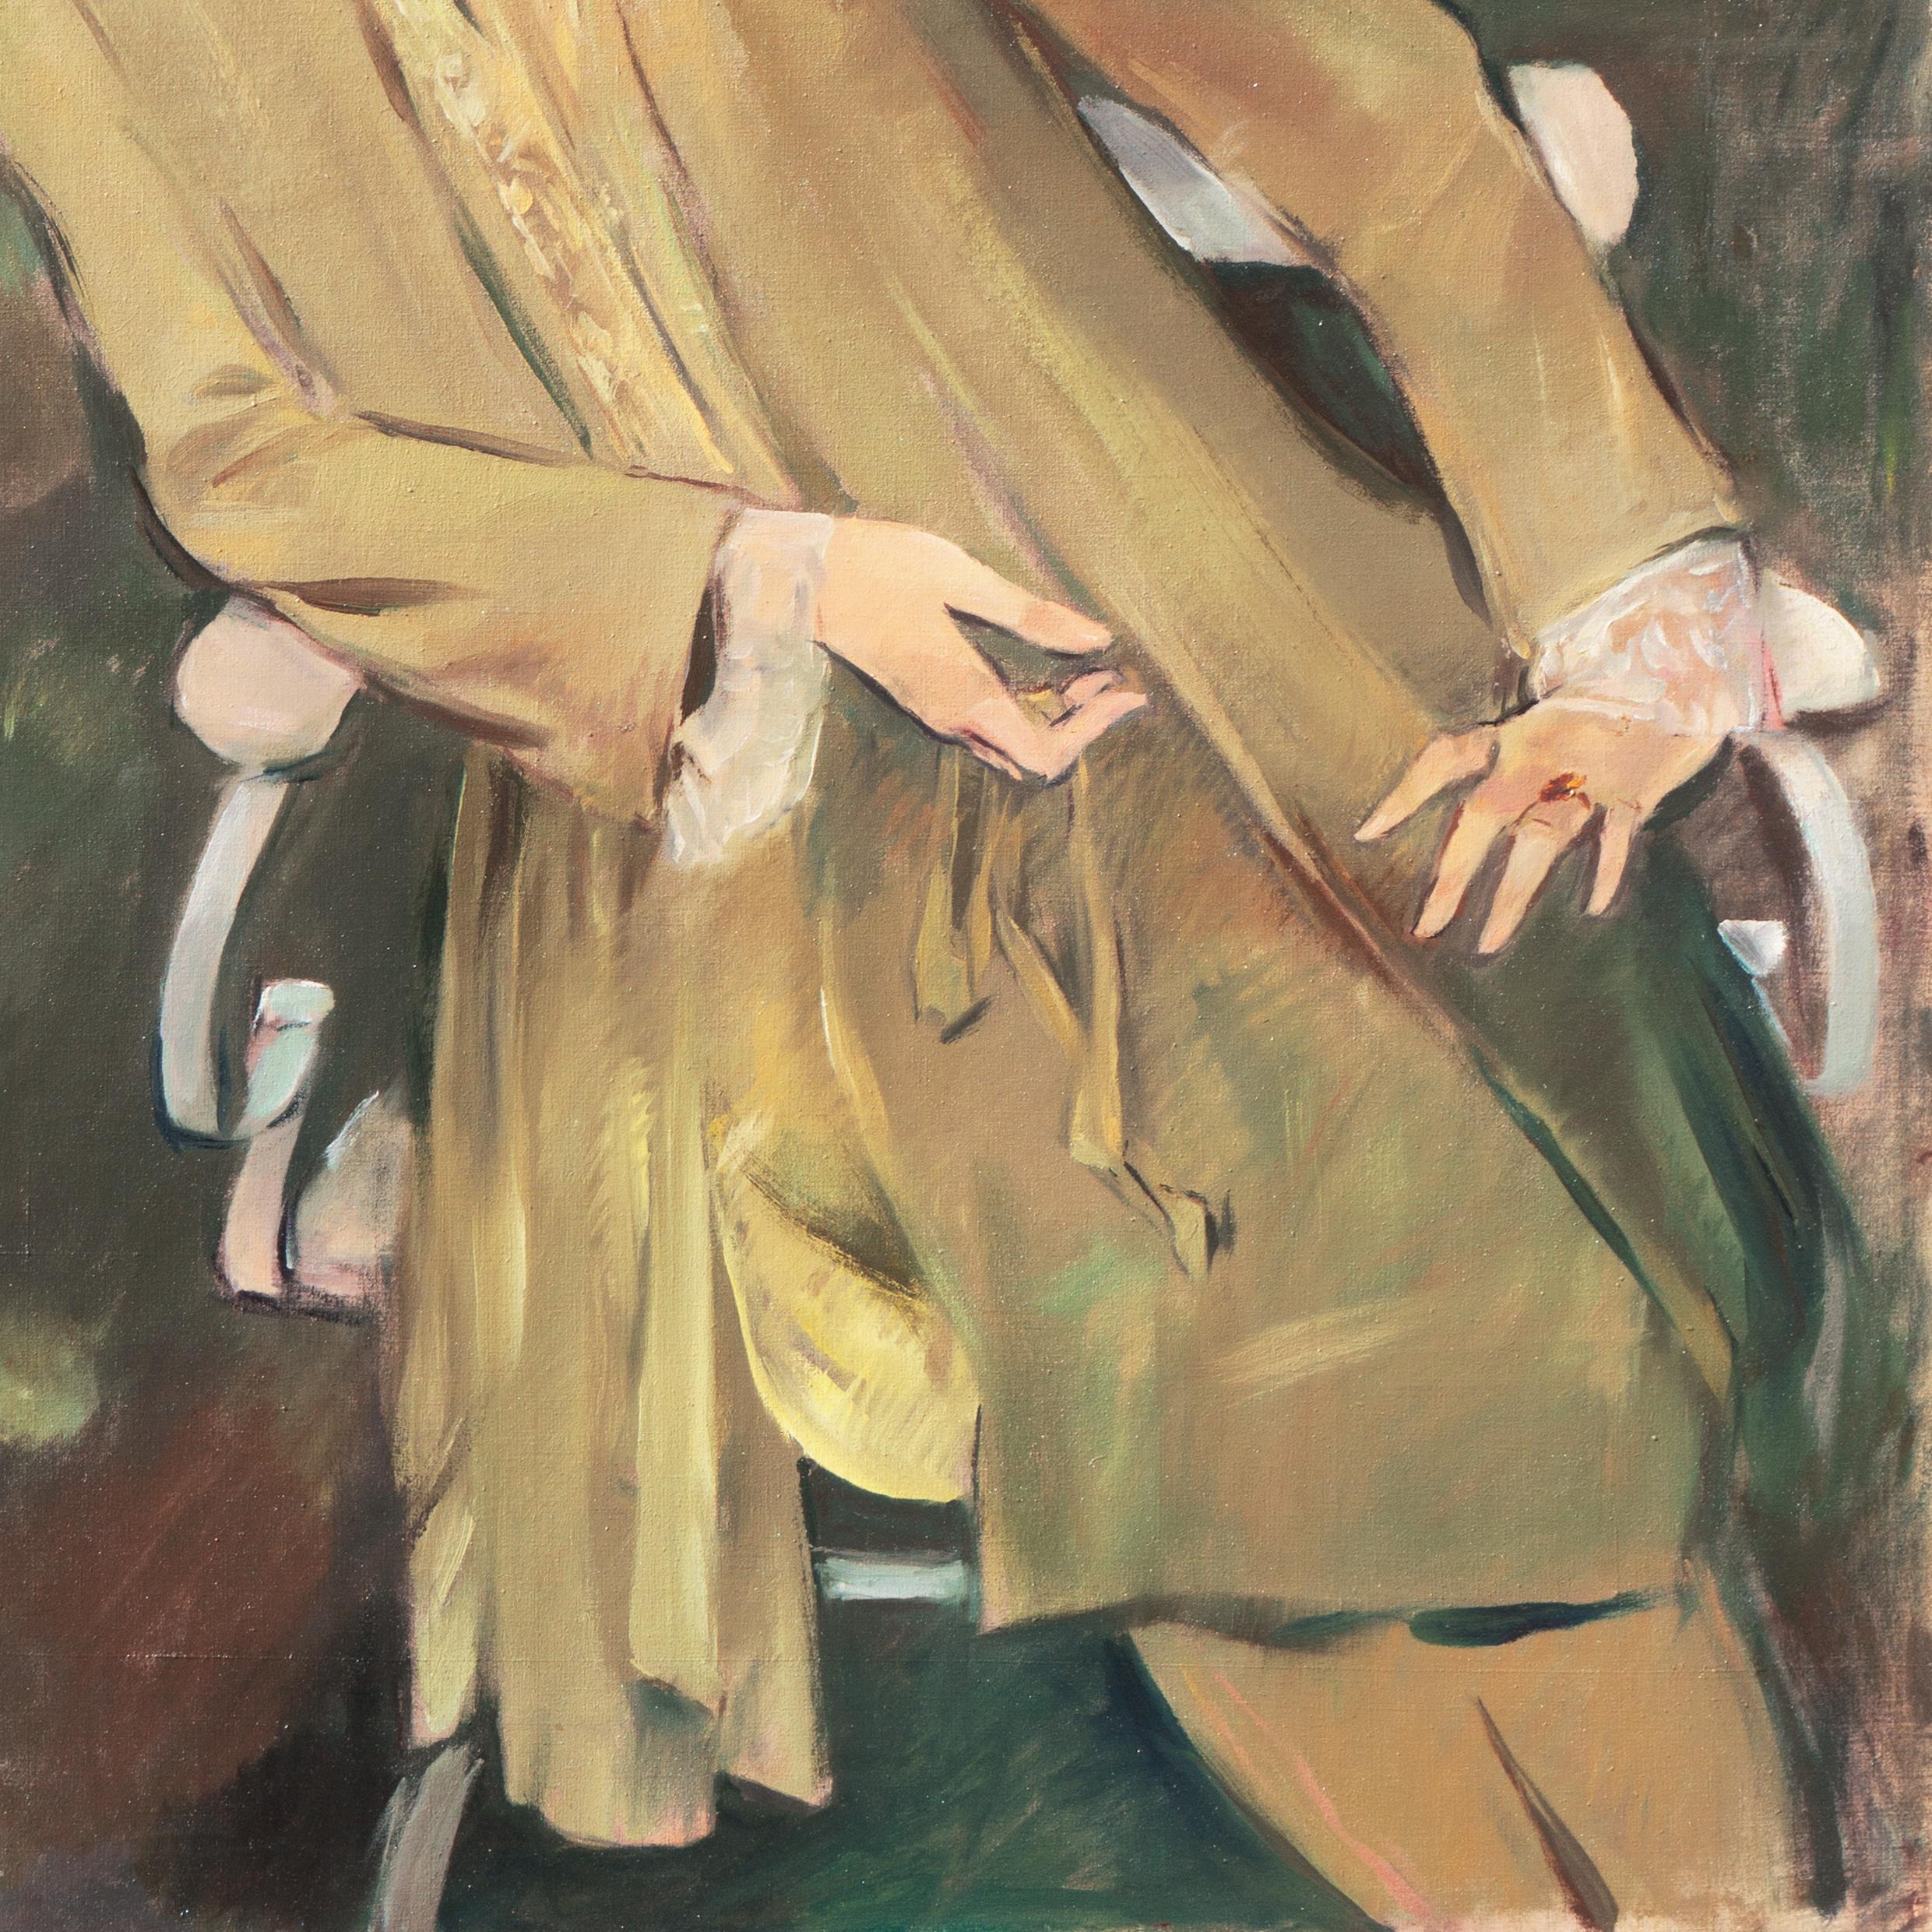 Signed lower left, 'Georg W. Rössner' for Georg Walter Rössner (German, 1885-1972), titled 'Bildnis Lieselotte Friedländer' and painted circa 1926; original artist card verso.

A substantial, Modernist portrait of the fashion designer, Lieselotte